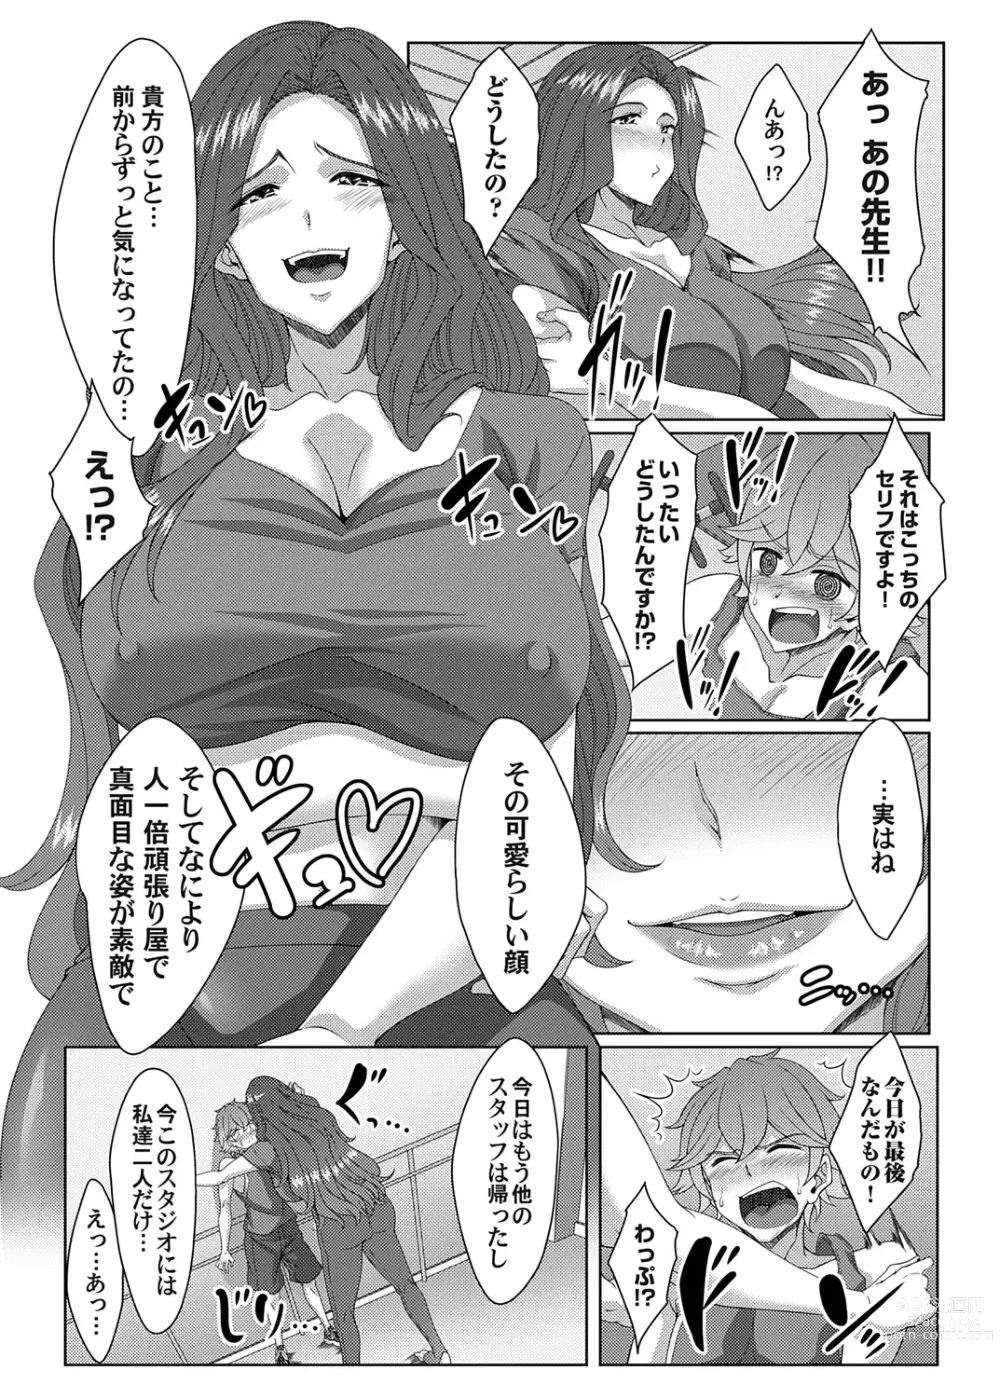 Page 192 of manga COMIC Magnum Vol. 176